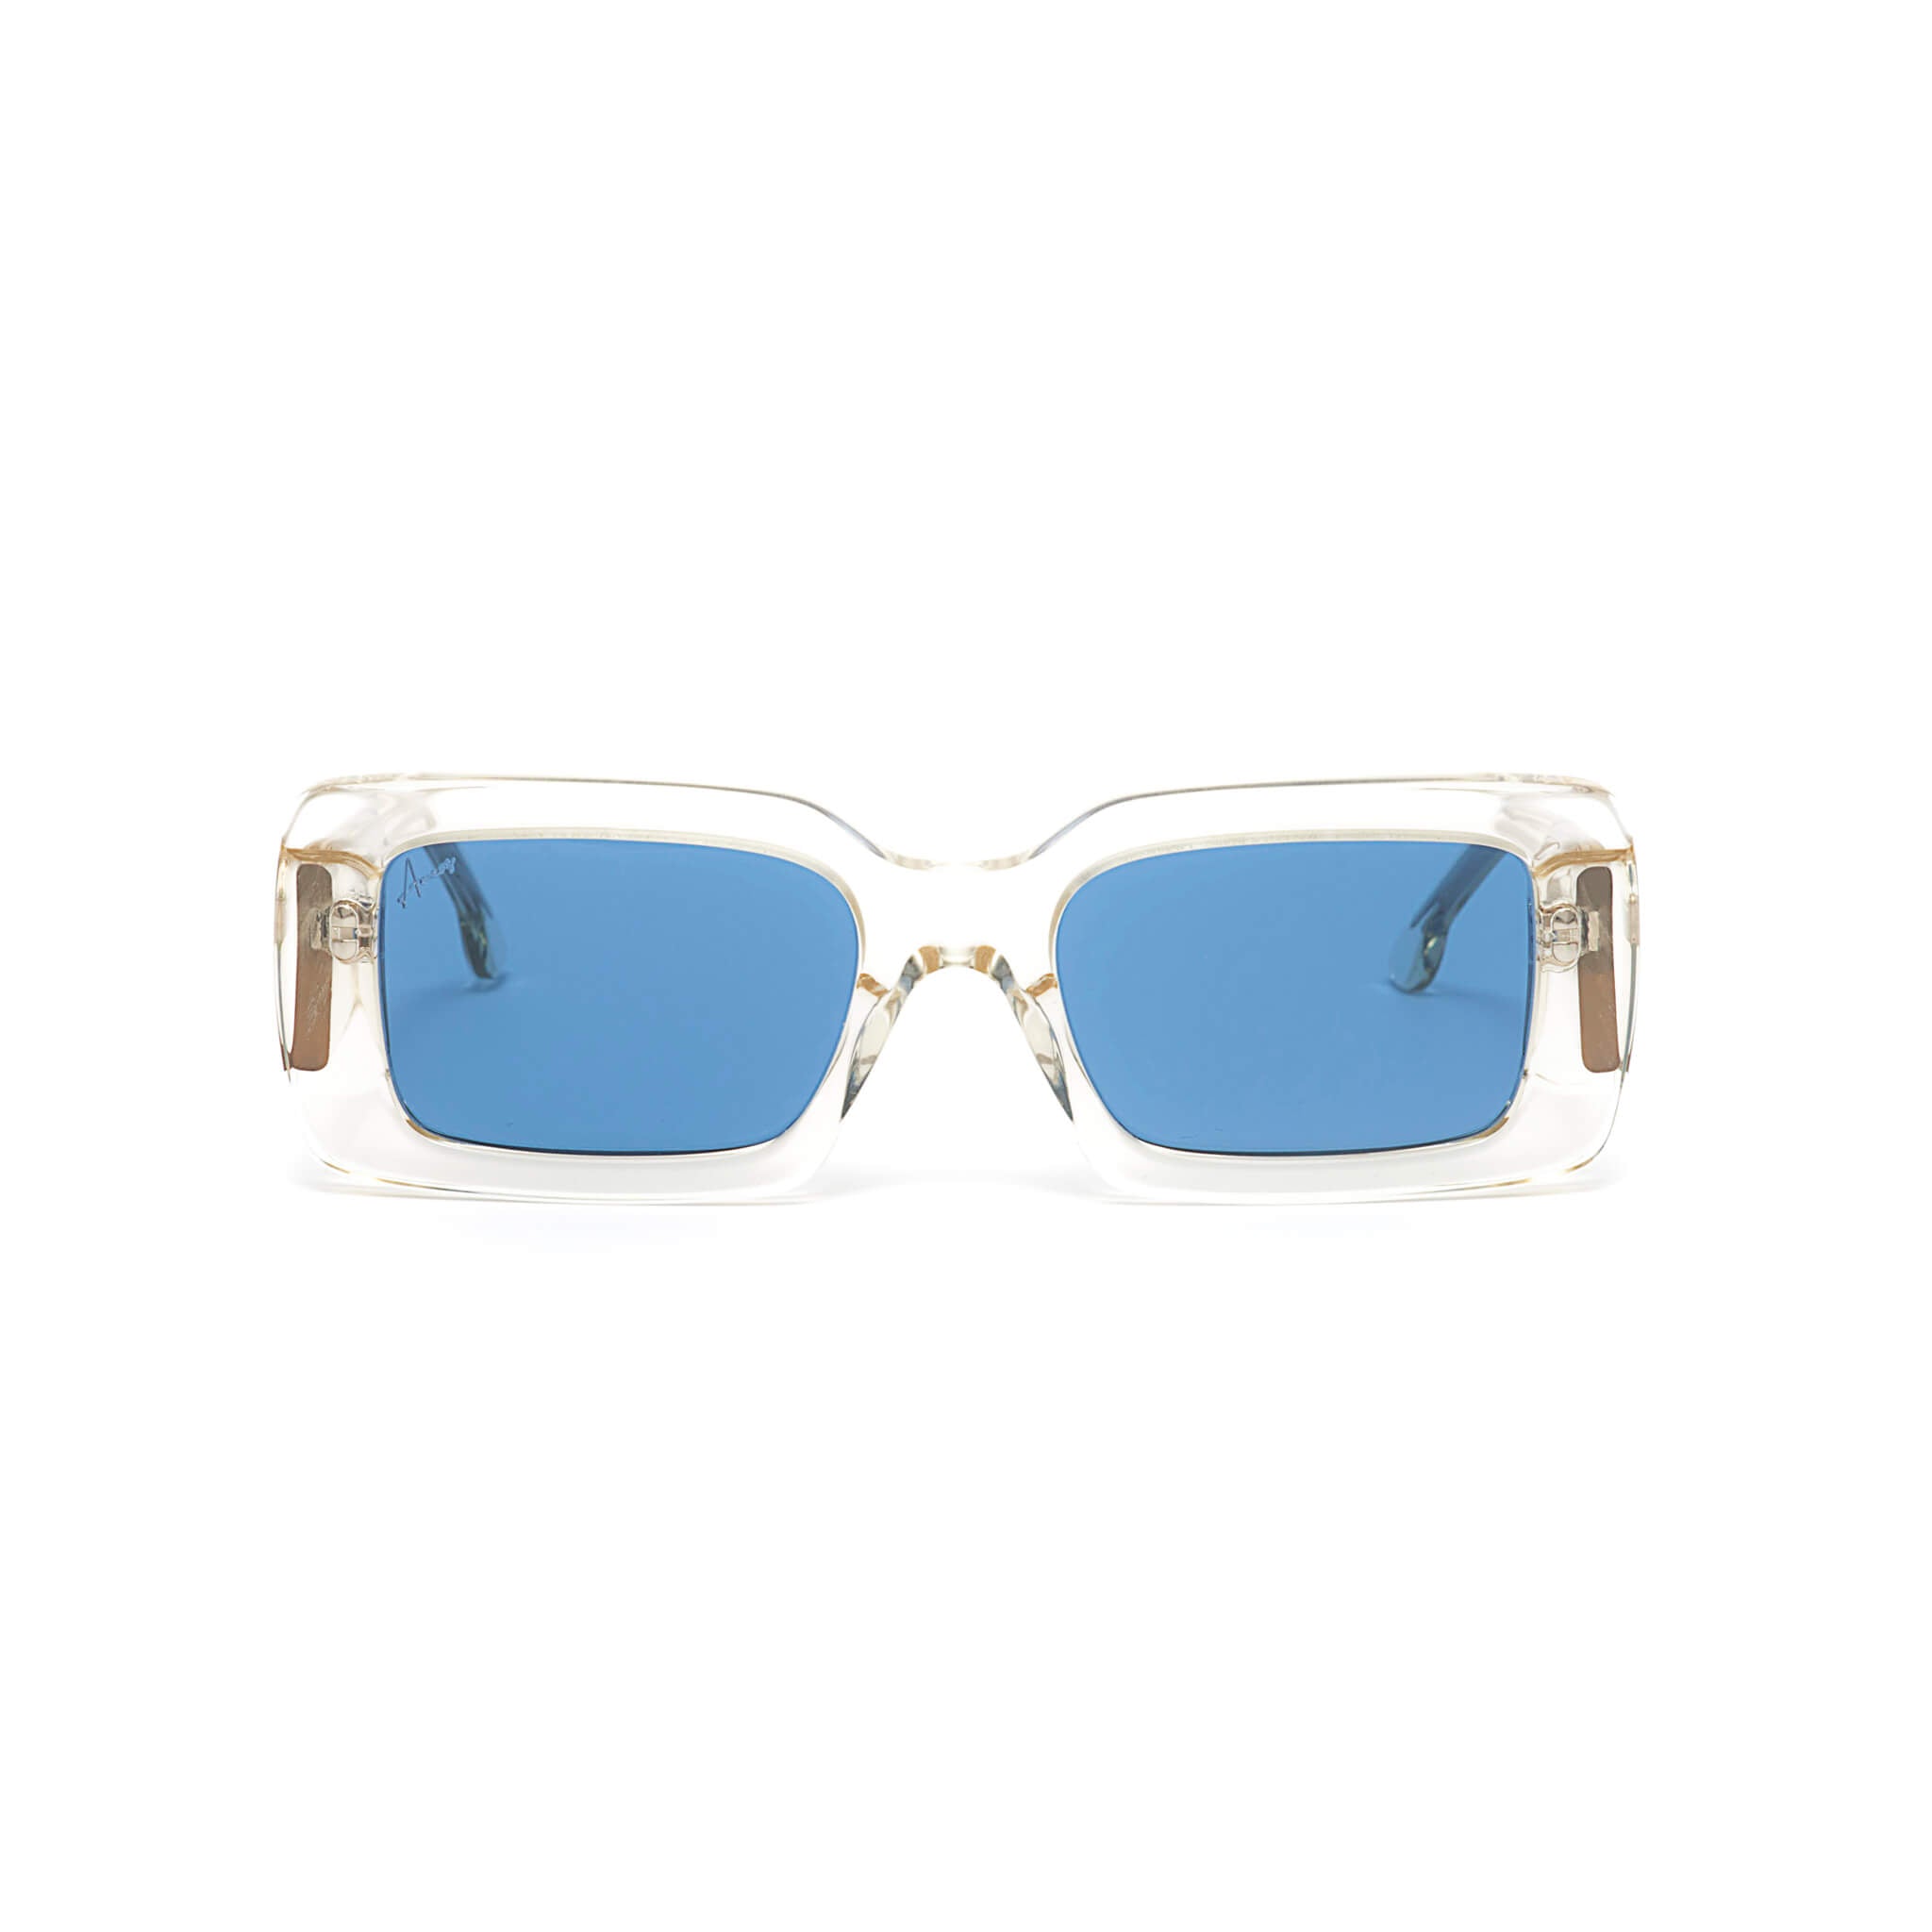 transparent rectangular frames with blue lenses sunglasses